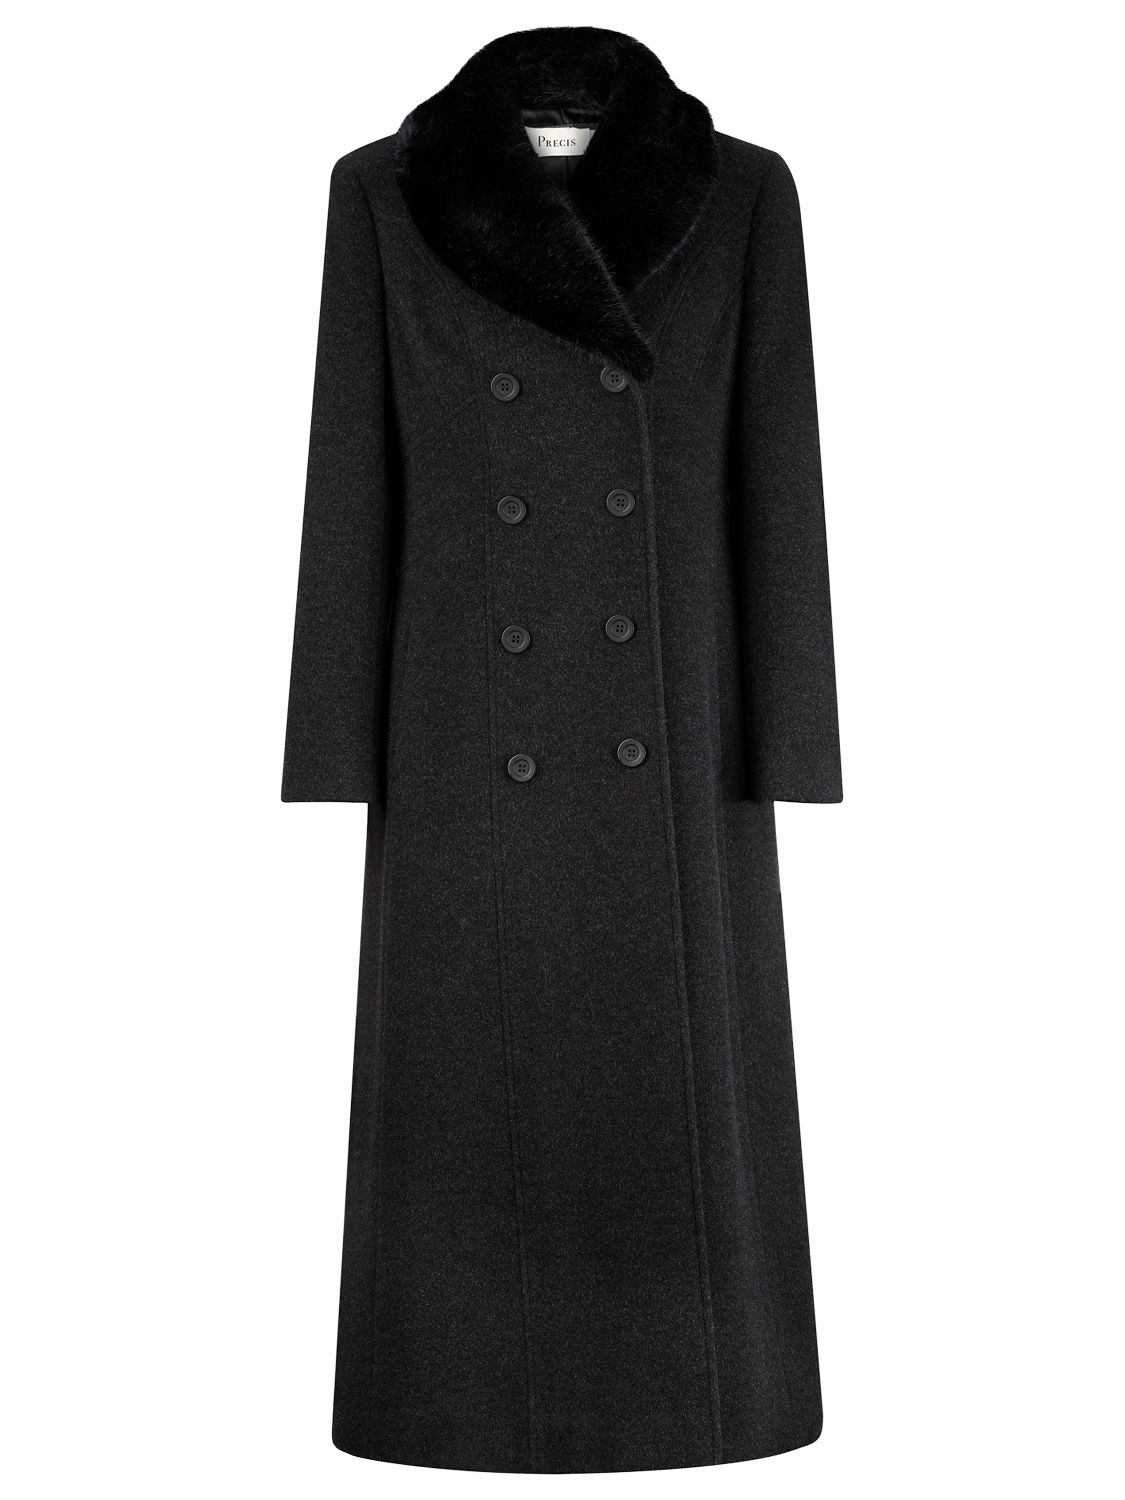 Precis Petite Full Length Wool Coat, Black at John Lewis & Partners